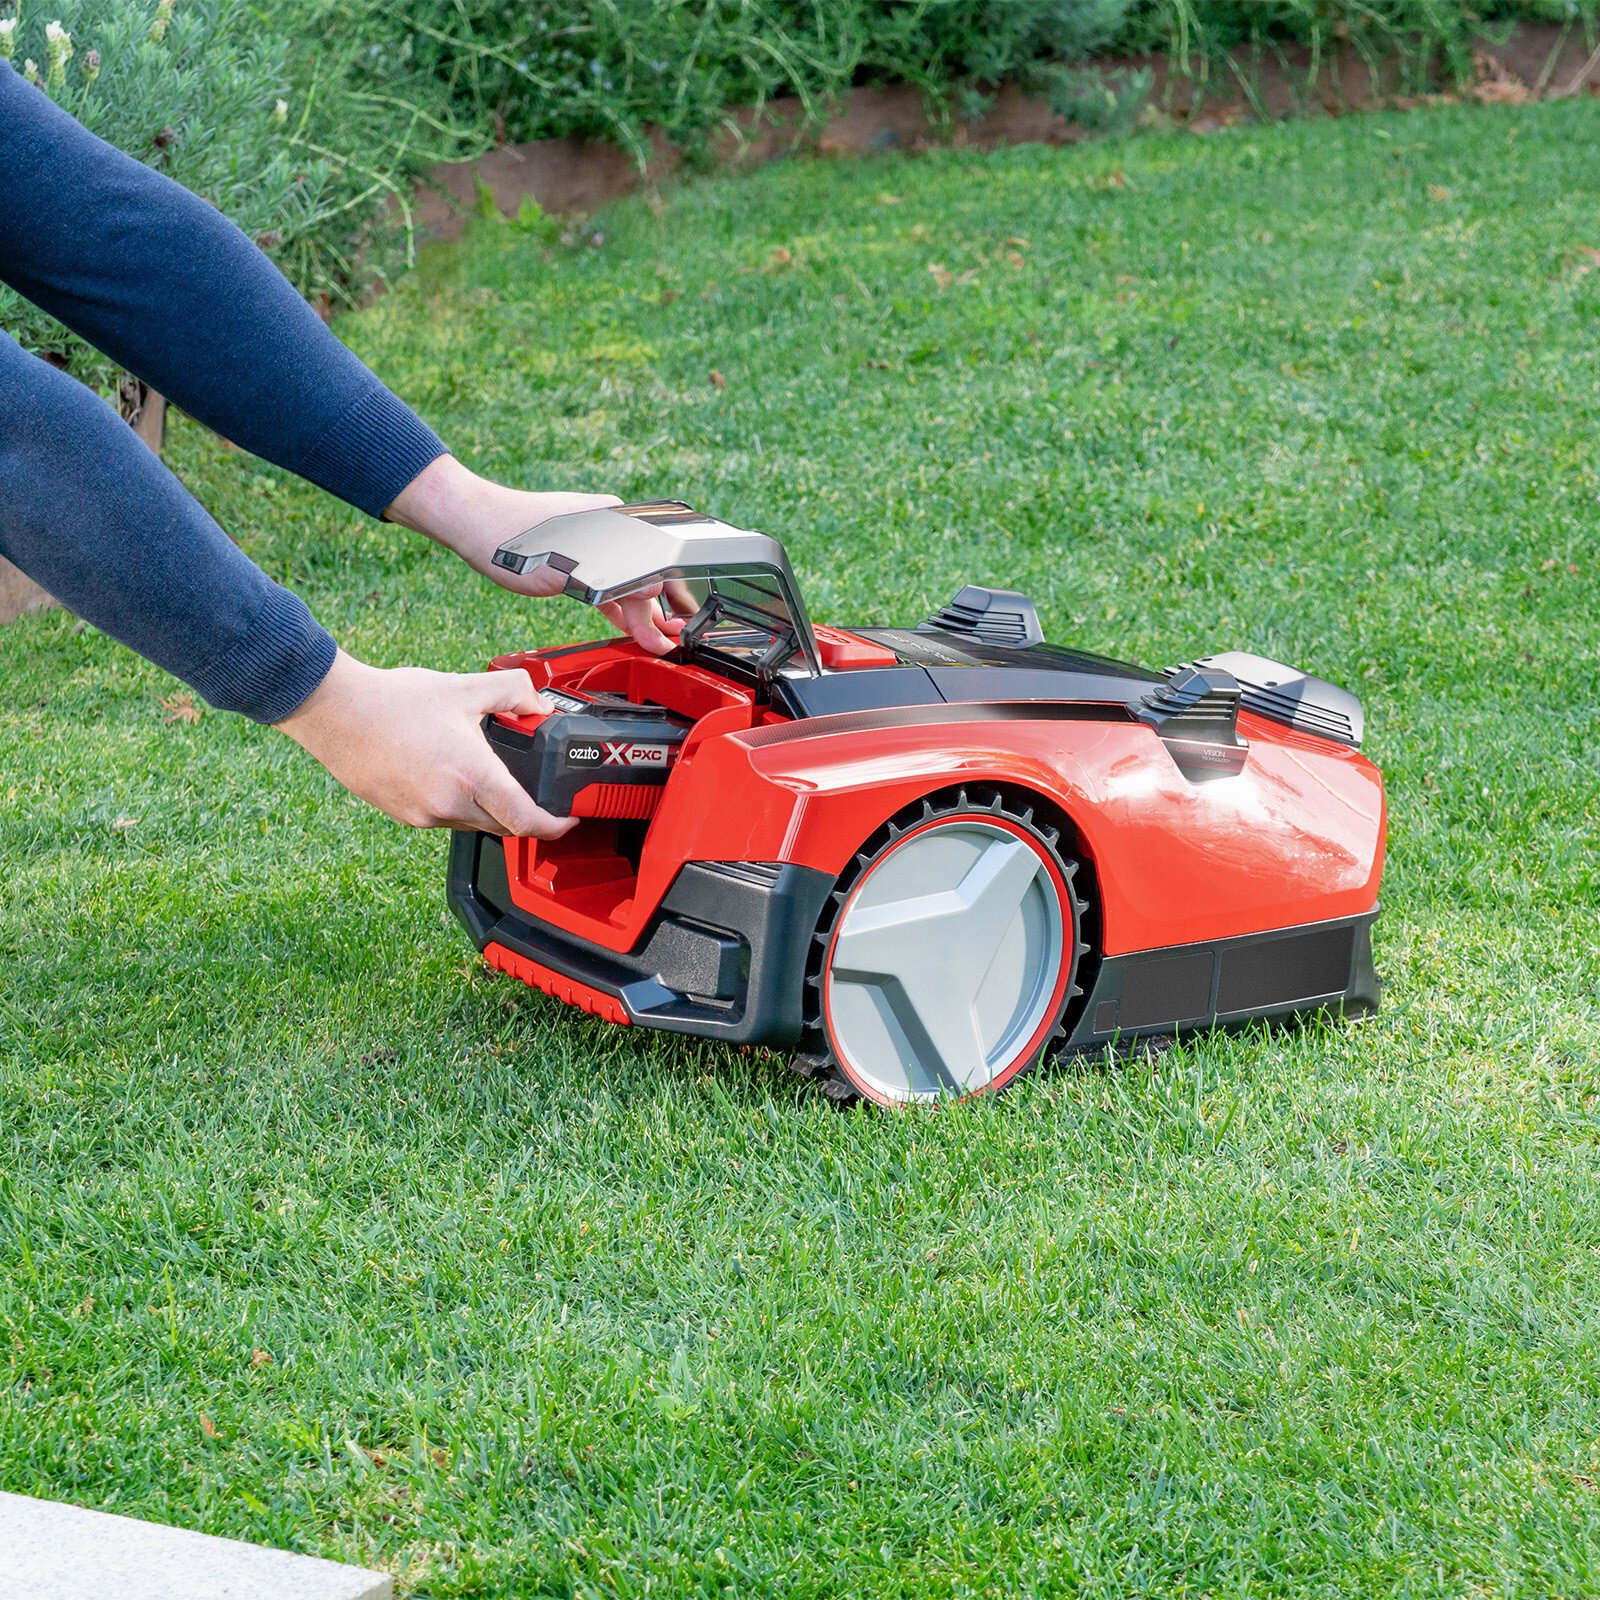 ozito-robot-lawn-mower-3001047-detail_image-102